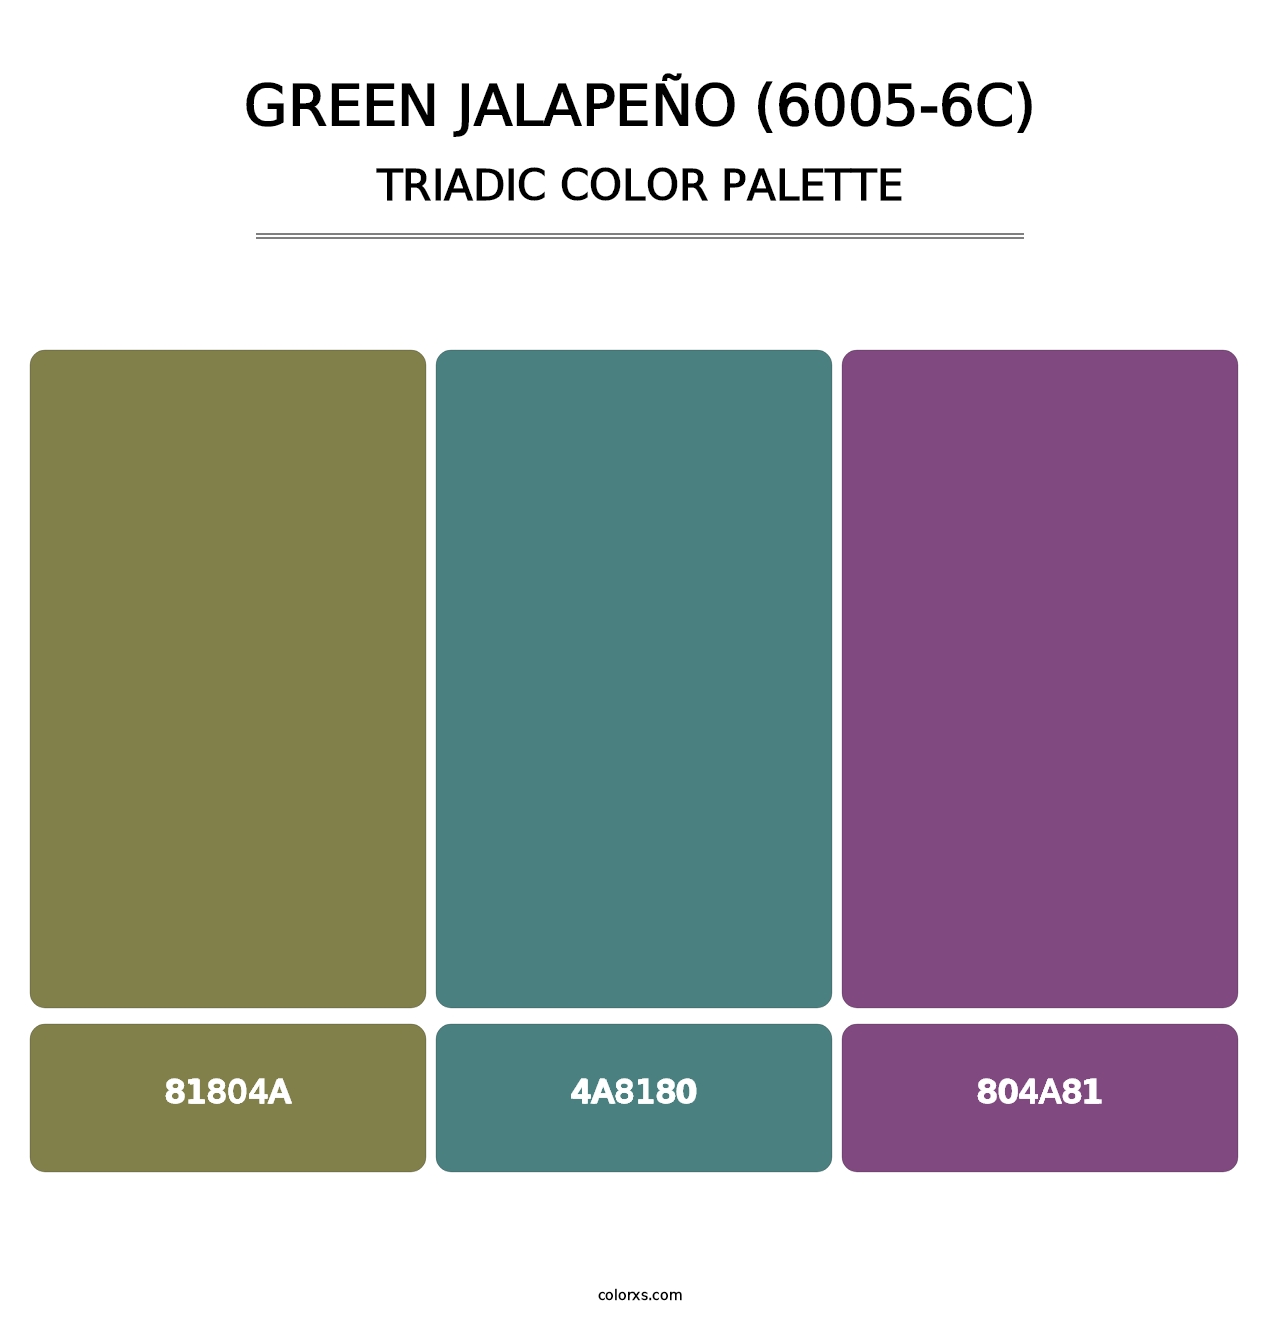 Green Jalapeño (6005-6C) - Triadic Color Palette